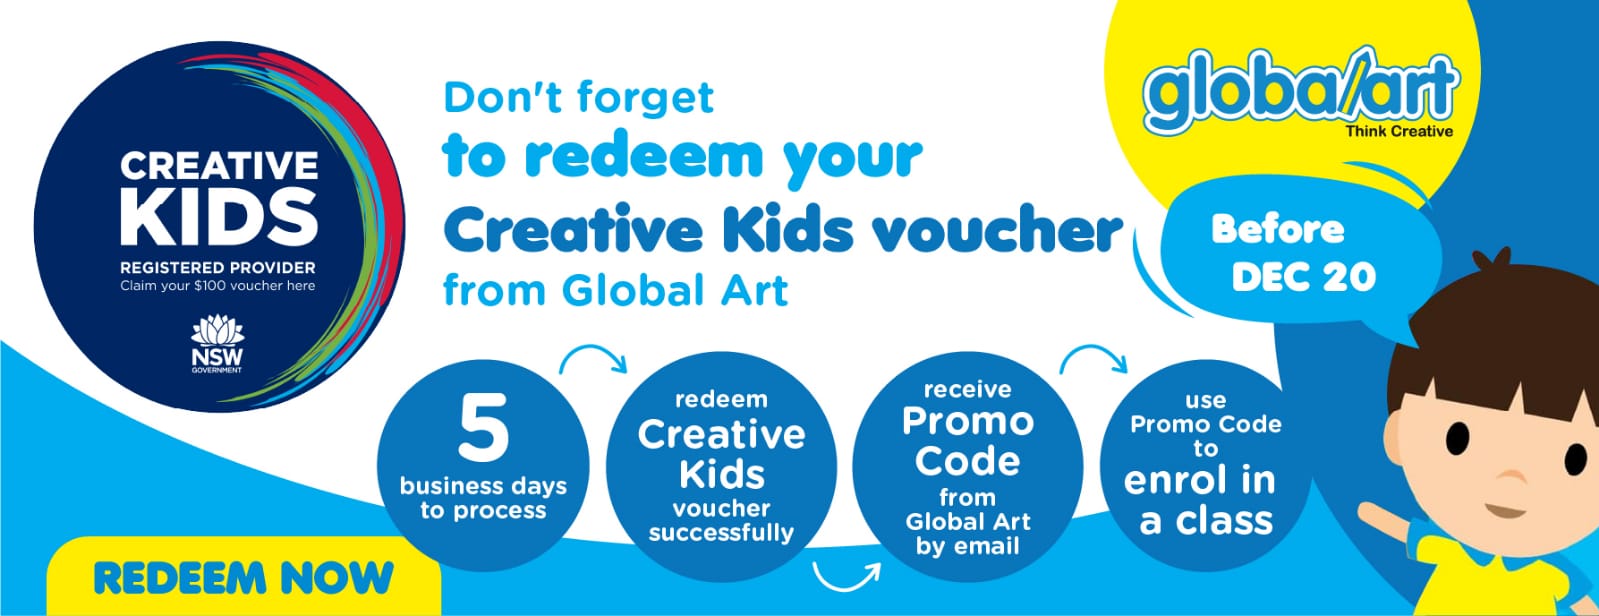 globalart-australia-creative-kids-registered-provider